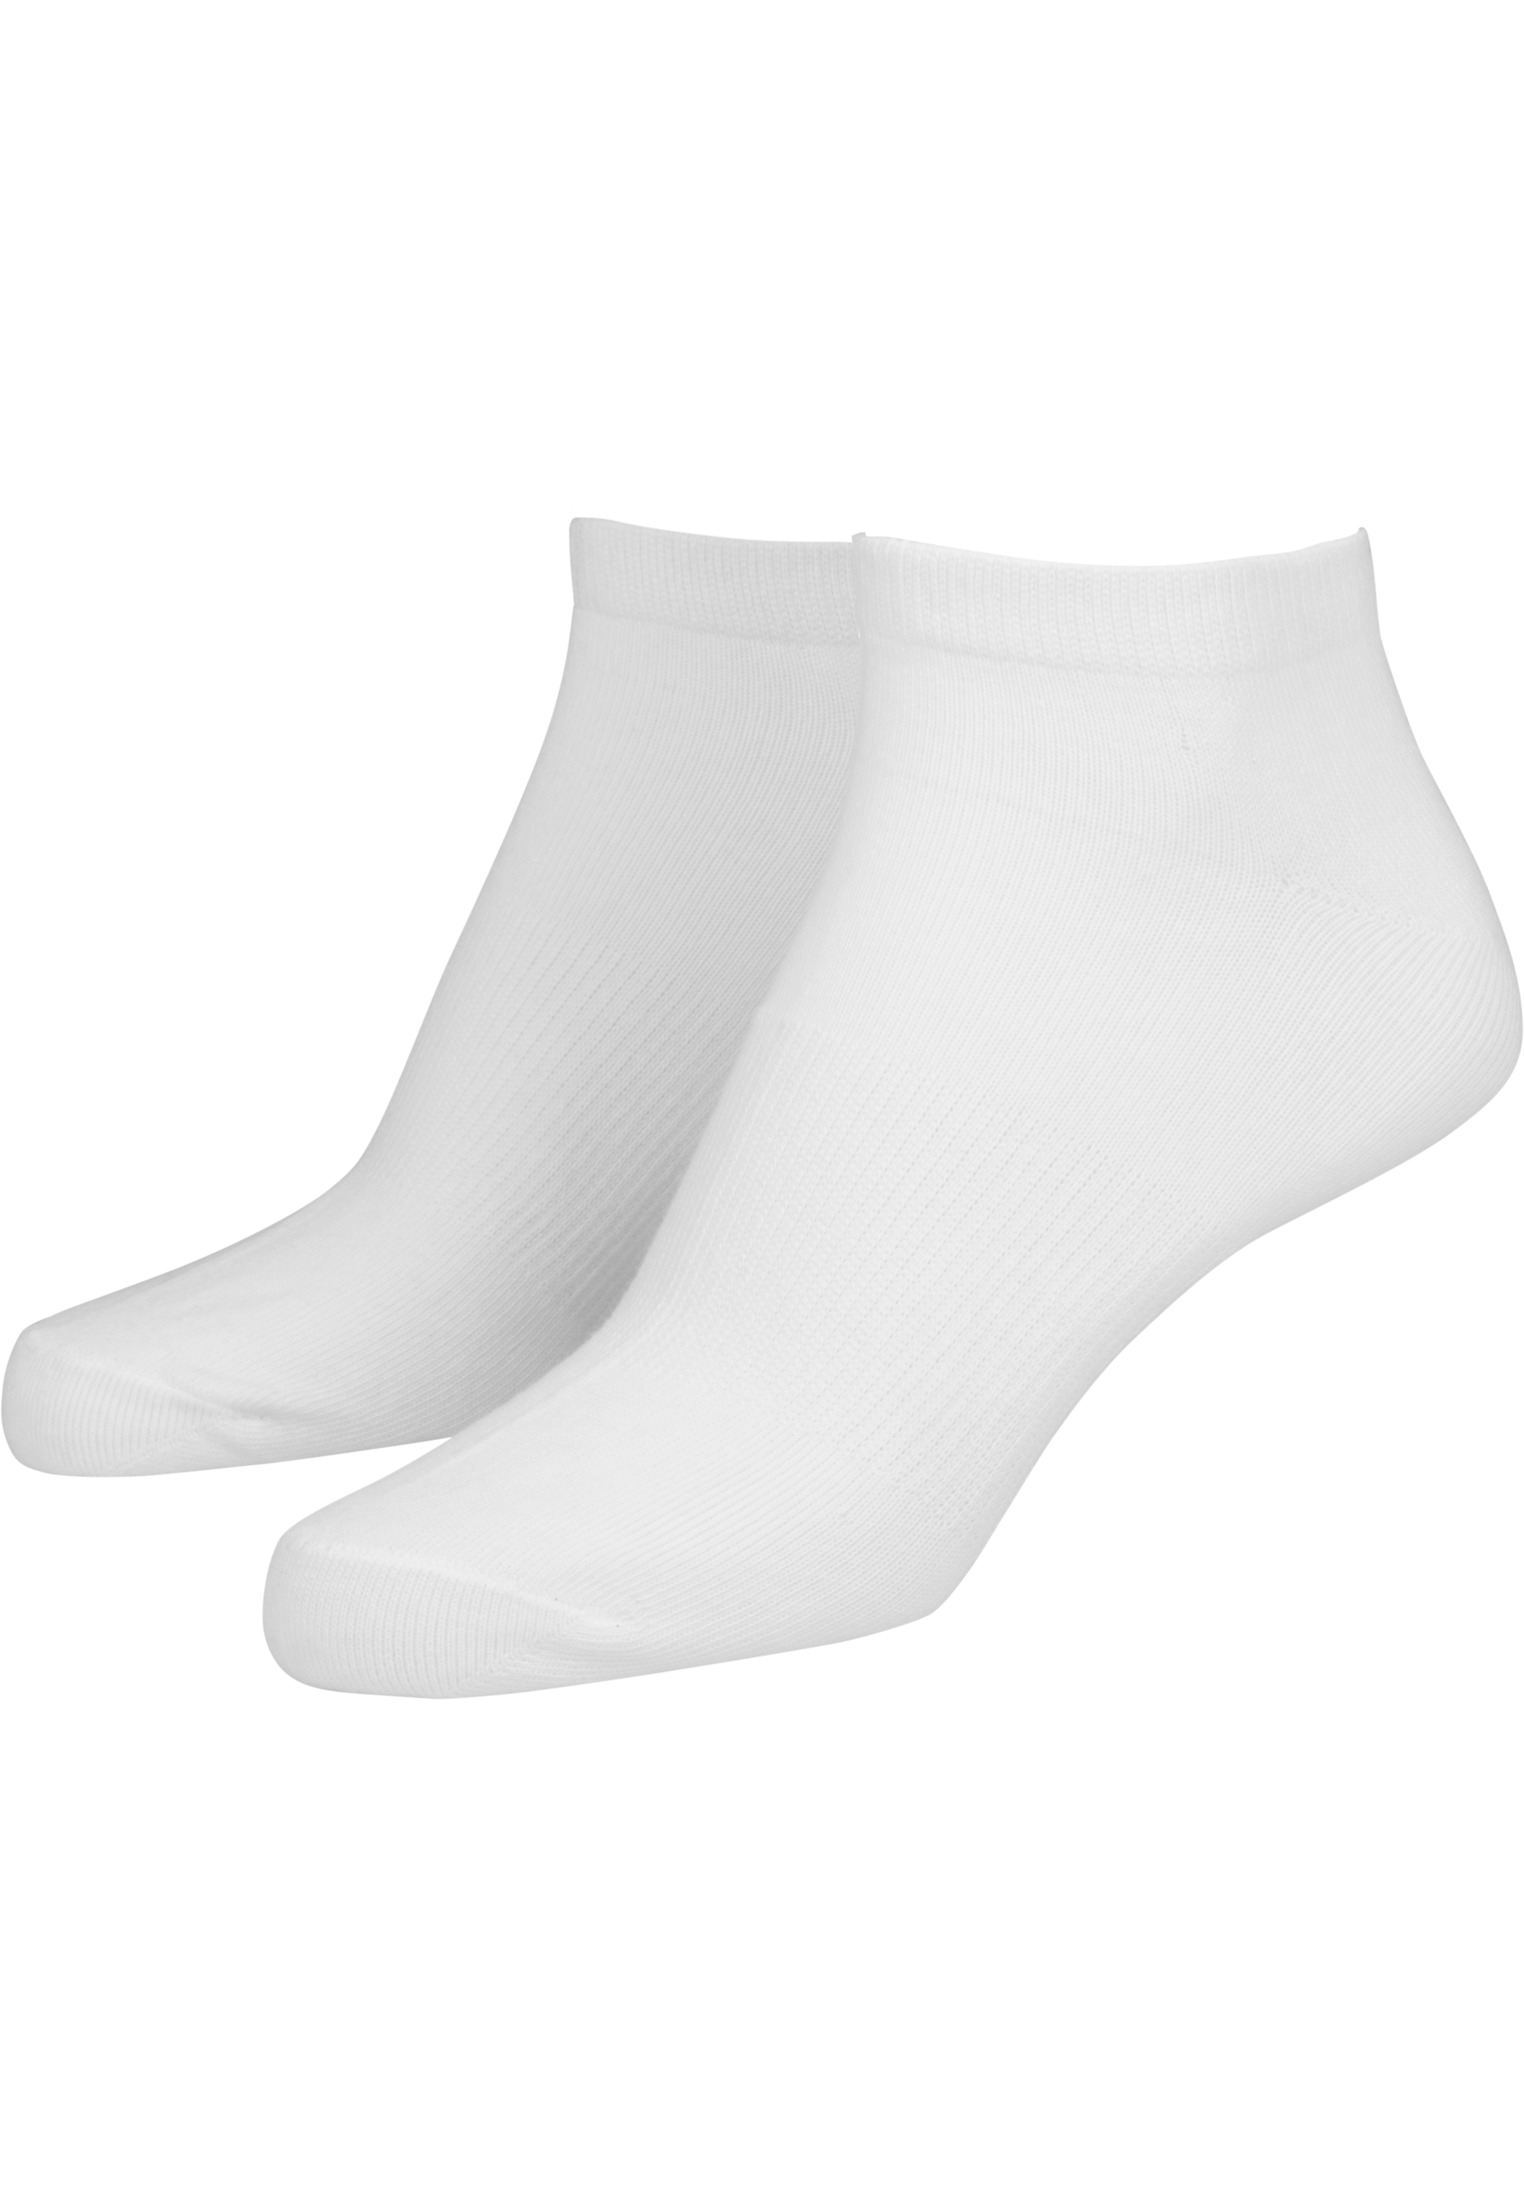 Socken No Show Socks 5-Pack in Farbe white